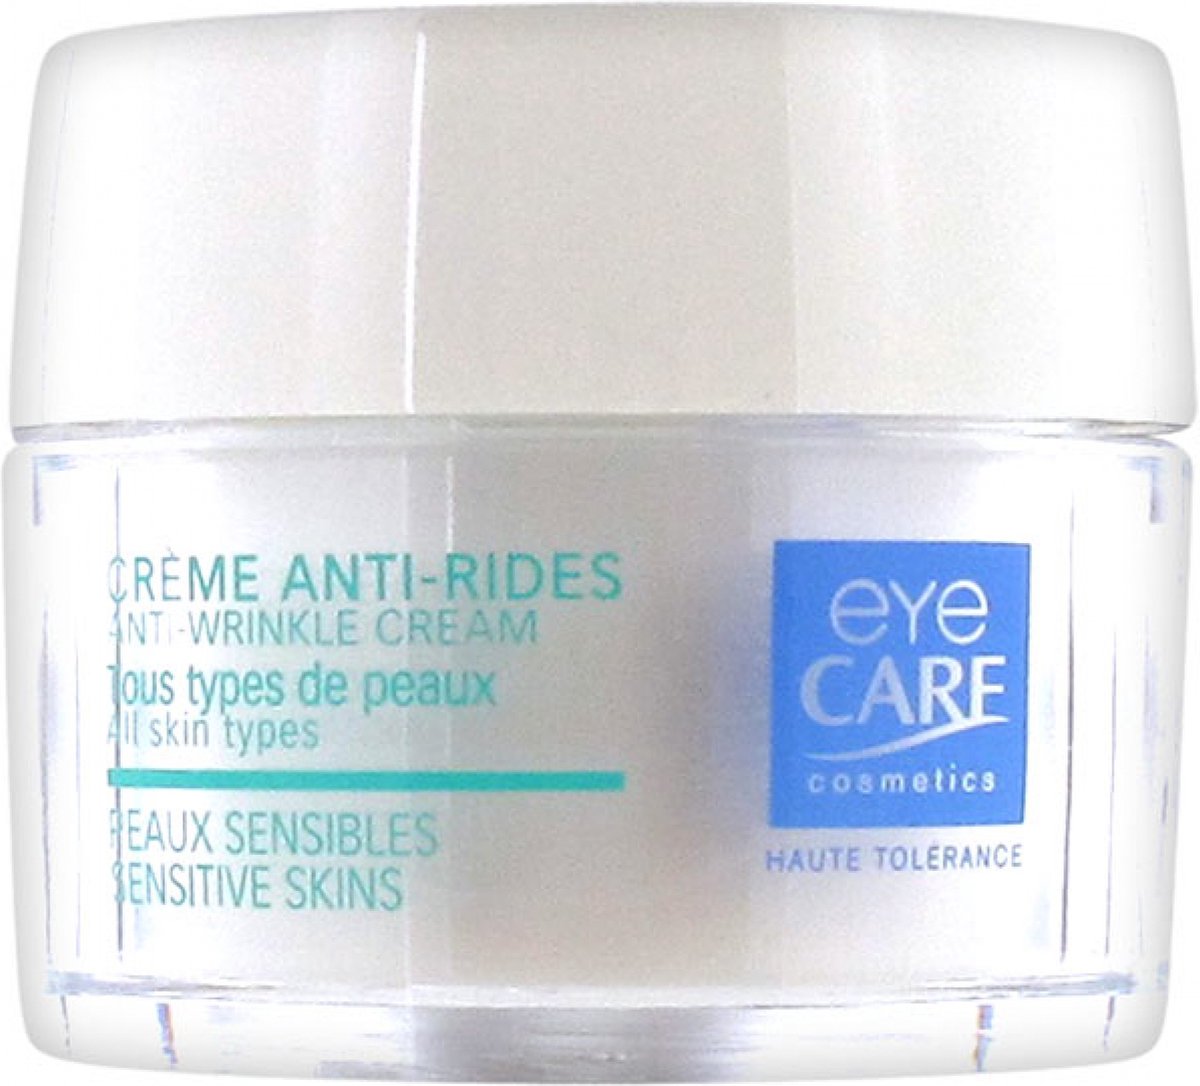 Eye Care Tri-active Anti-rimpelcrème 30 ml